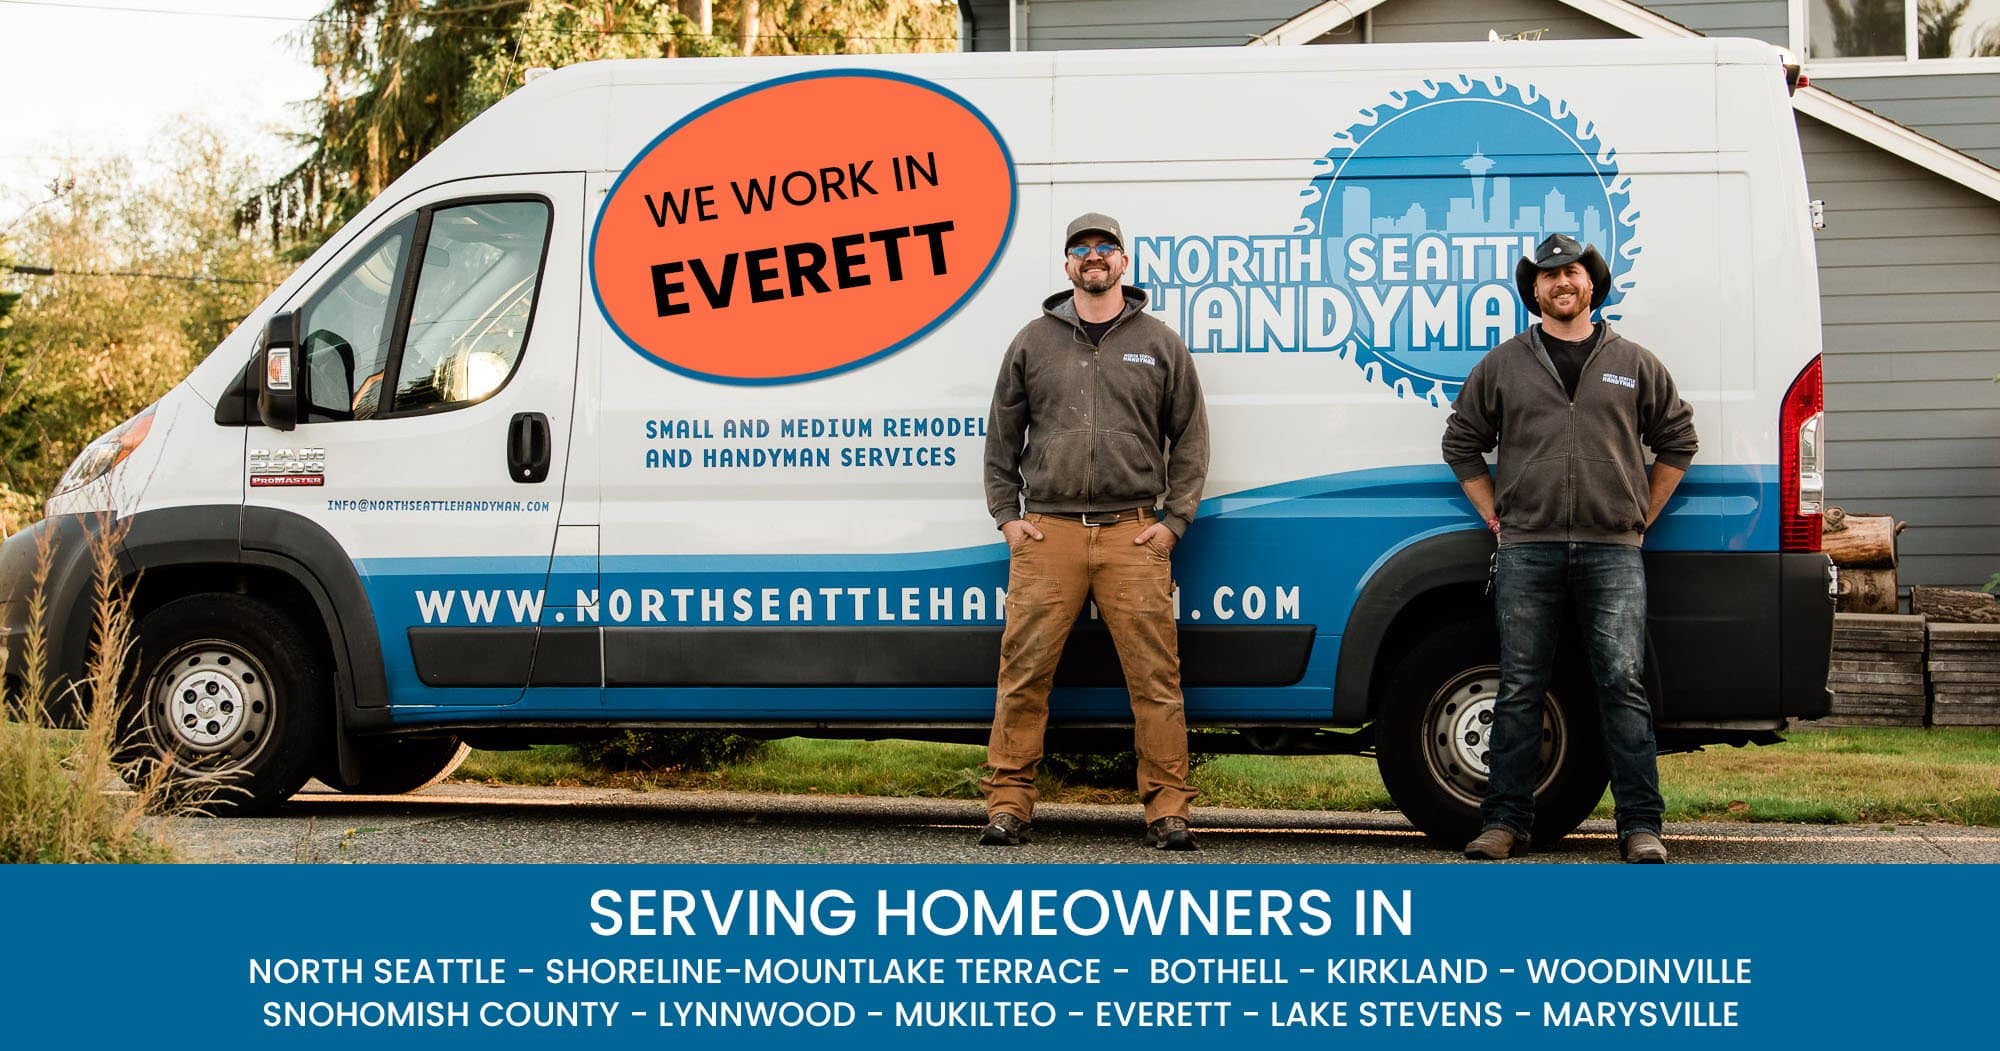 Everett Handyman Services by North Seattle Handyman